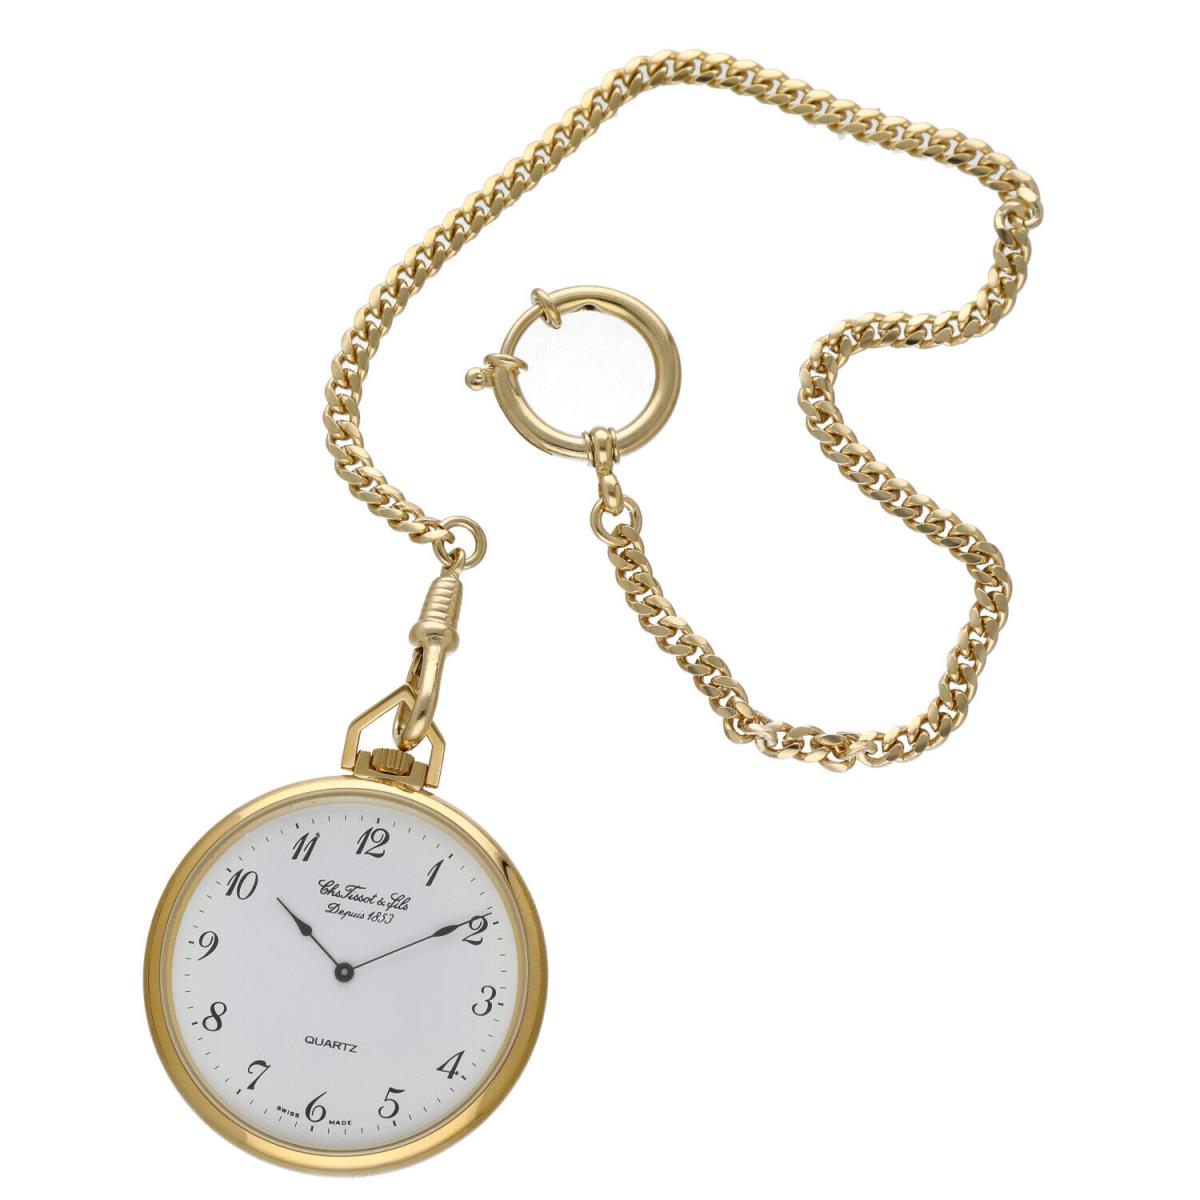 Tissot T82.4.554.12 White Arabic Numerals Dial Gold Tone Quartz Pocket Watch - White Dial